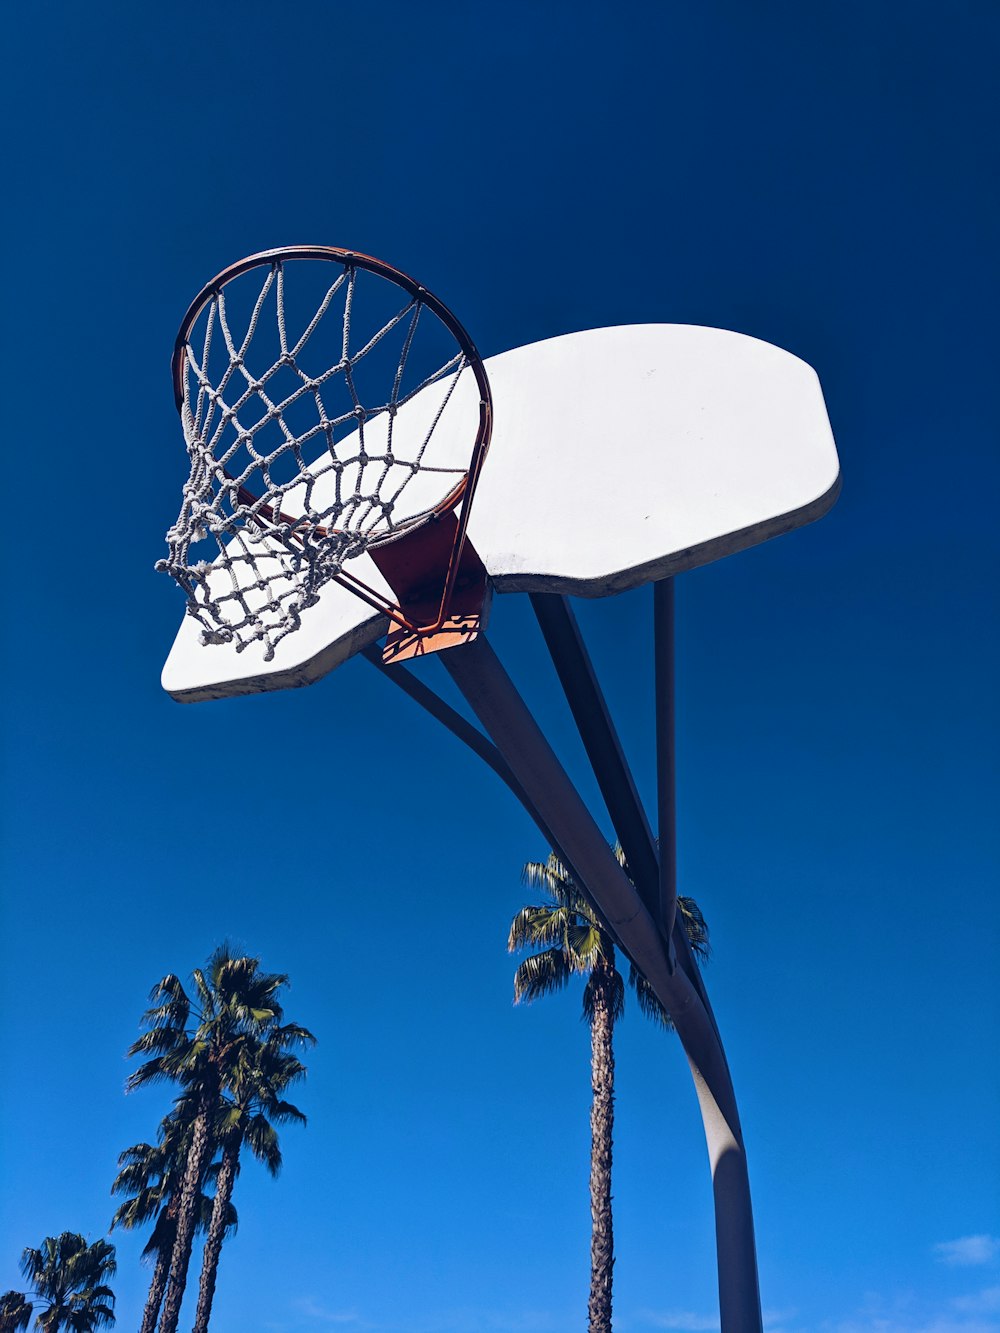 black and white basketball system across blue sky